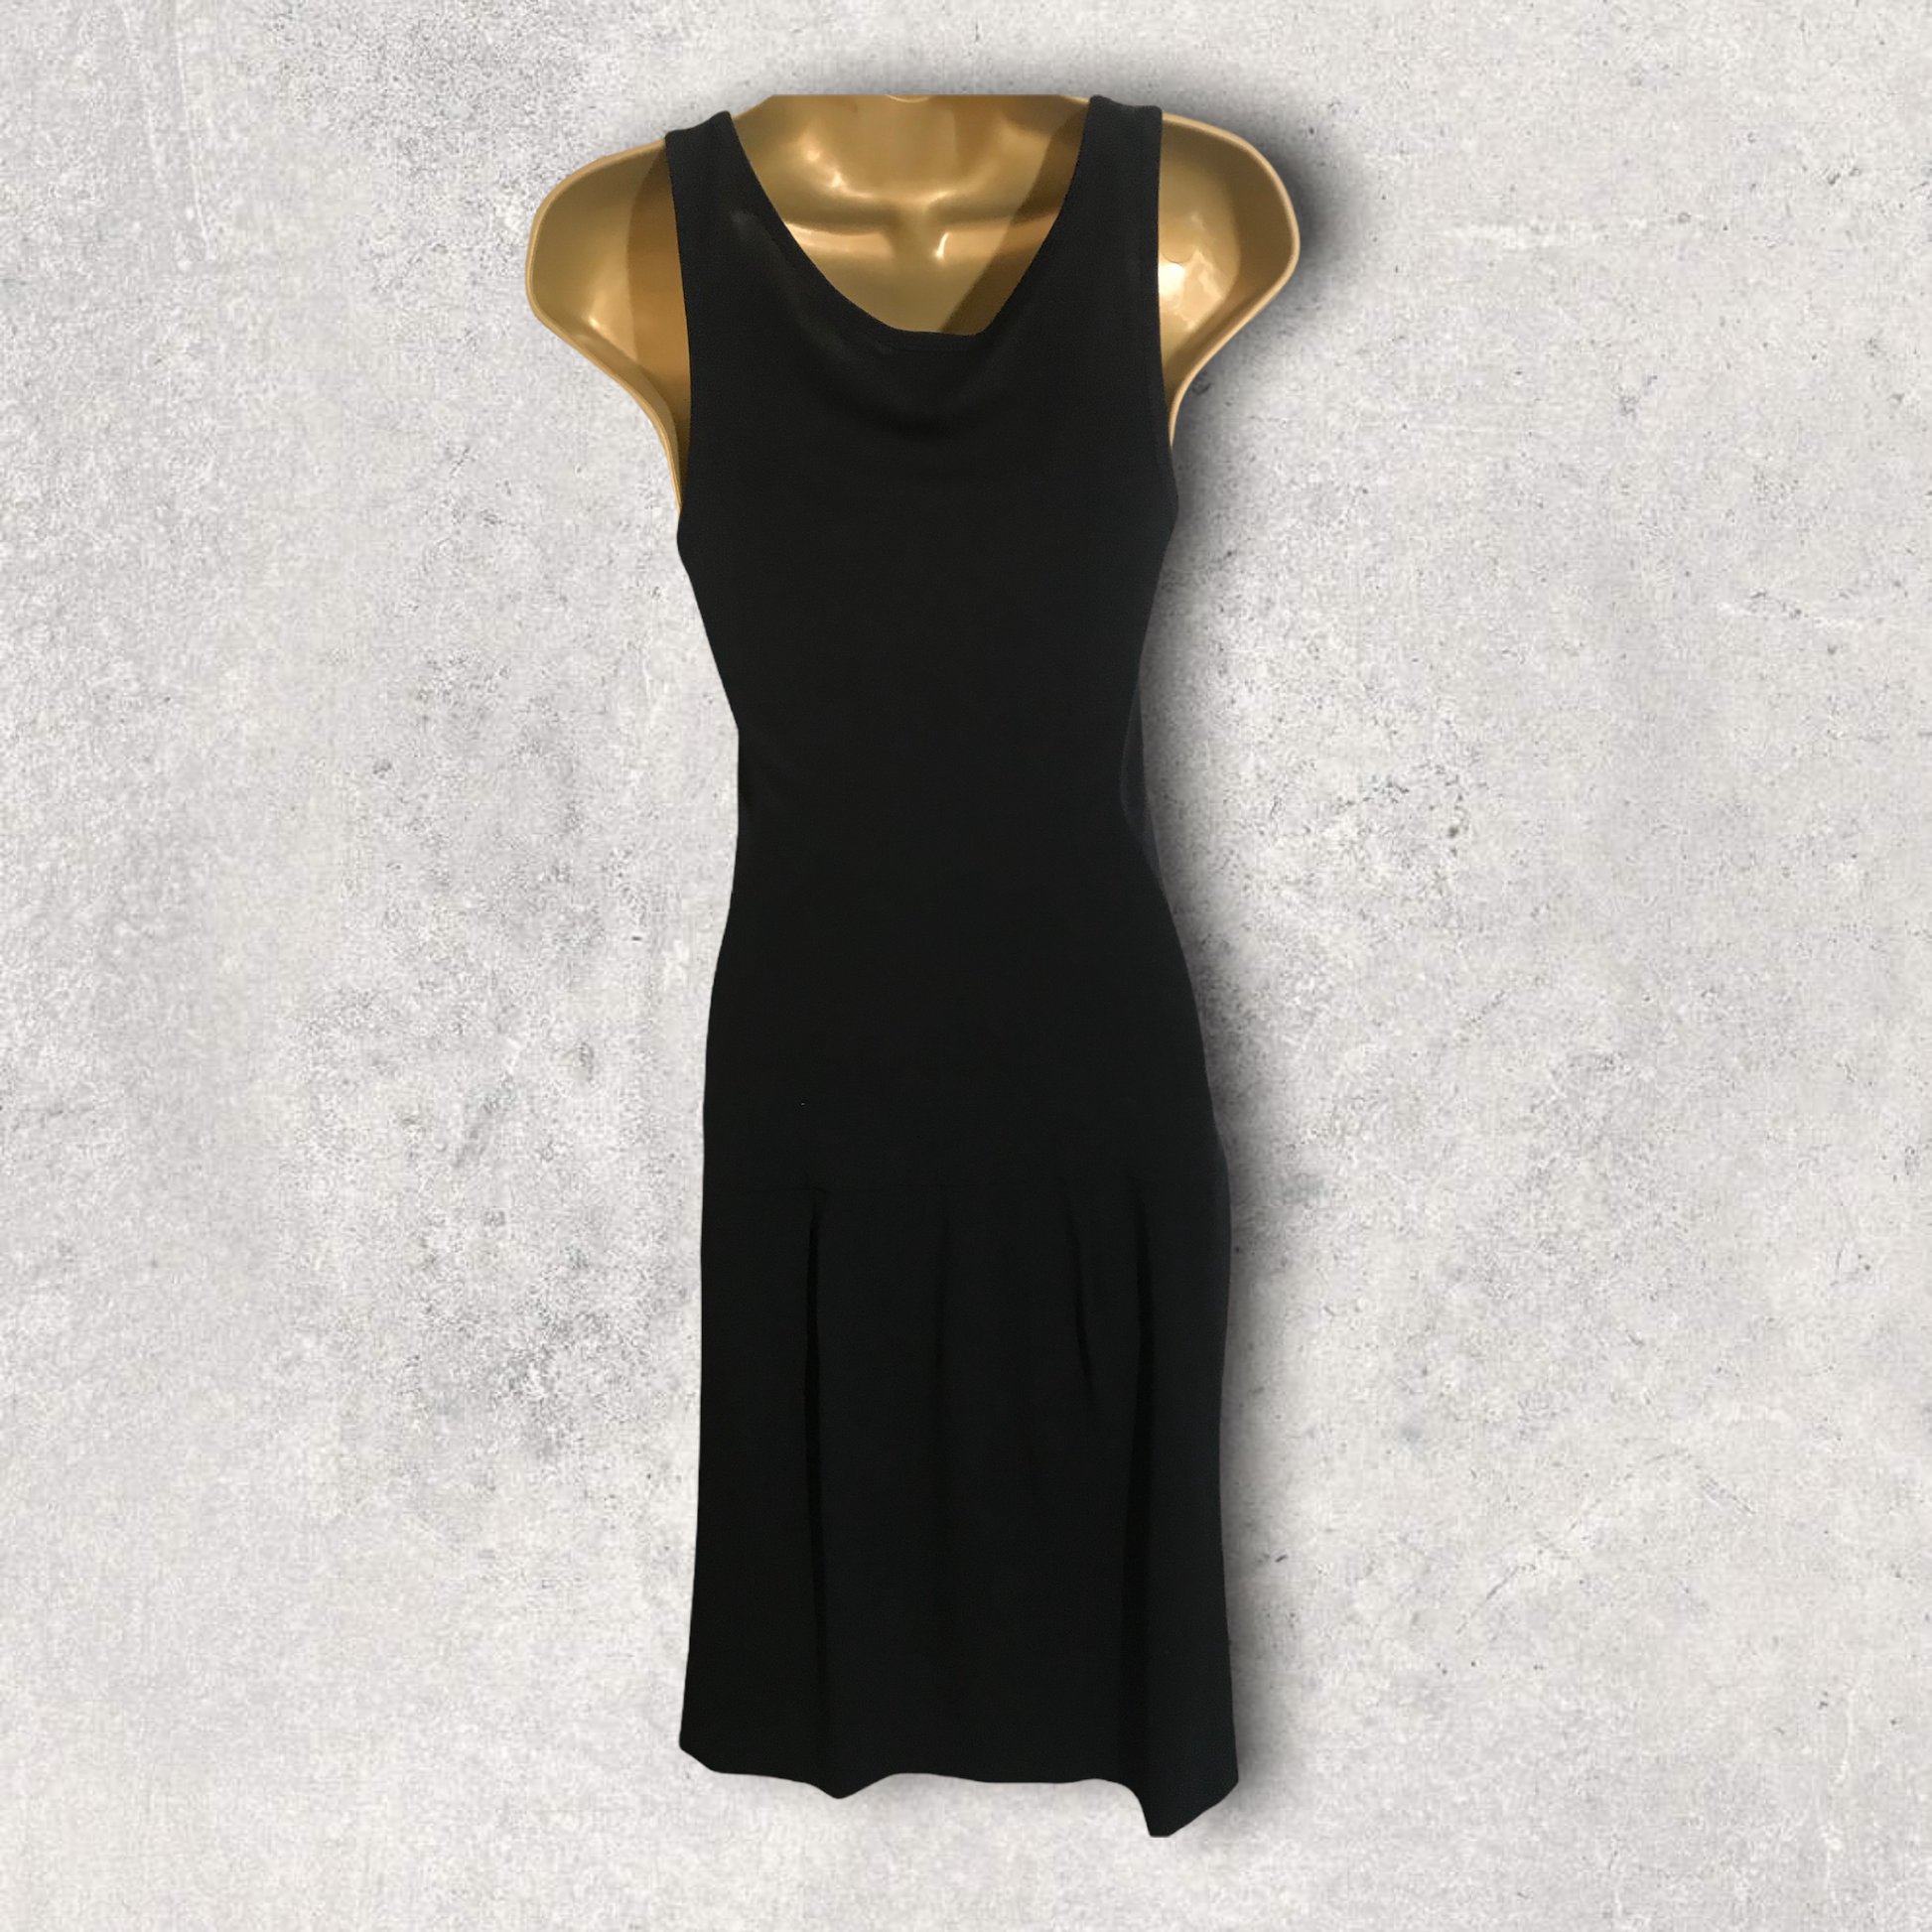 DKNY Donna Karan Women's Black Drop Waist Wool Dress UK 8 US 4 EU 36 Timeless Fashions